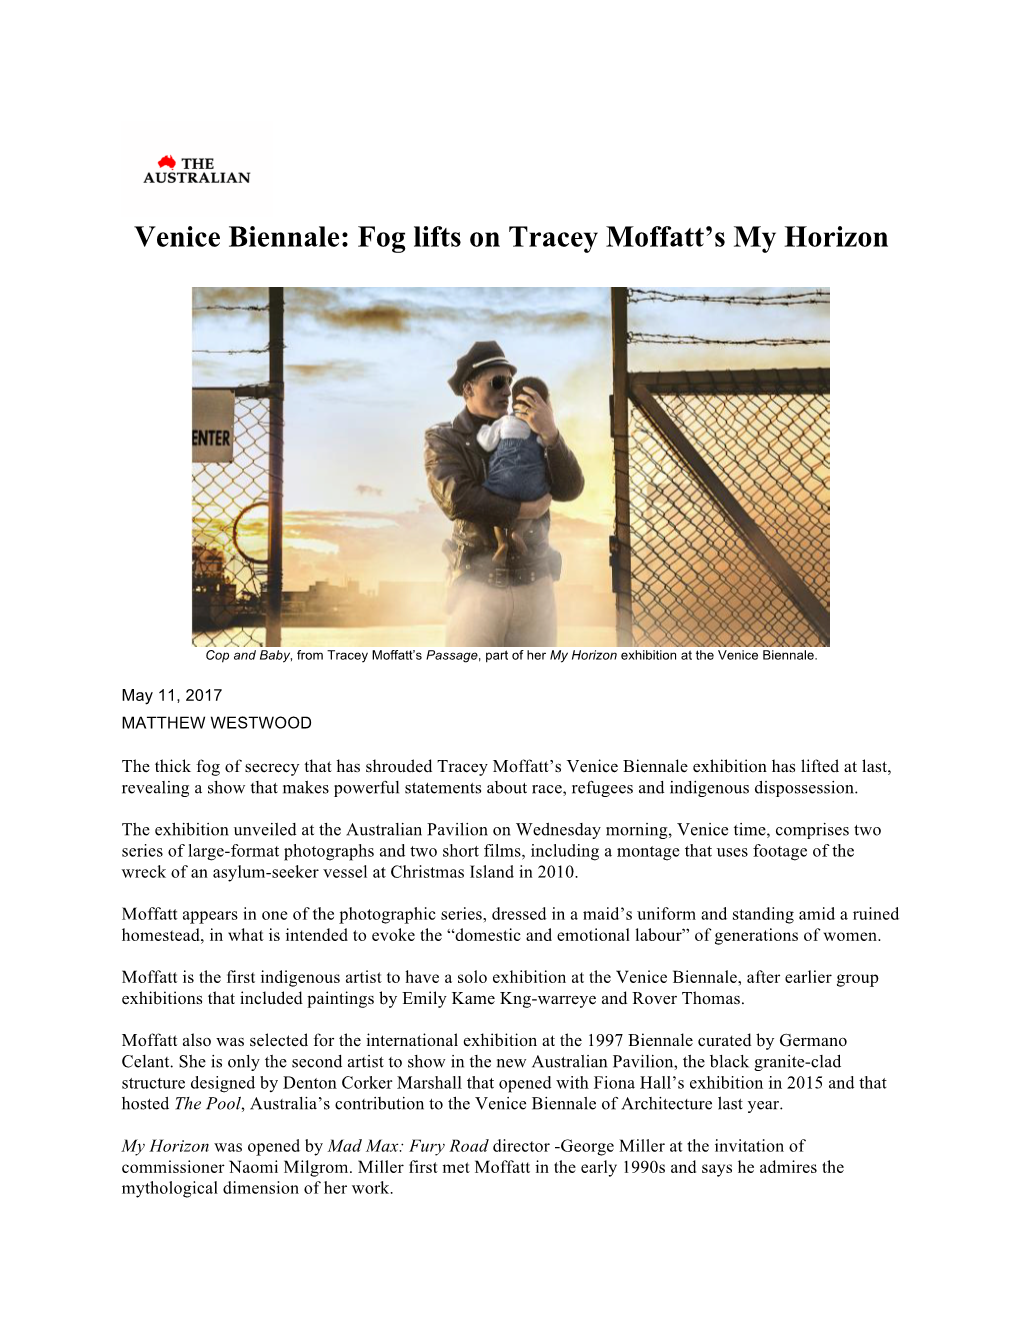 The Australian, Venice Biennale- Fog Lifts on Tracey Moffatt's My Horizon